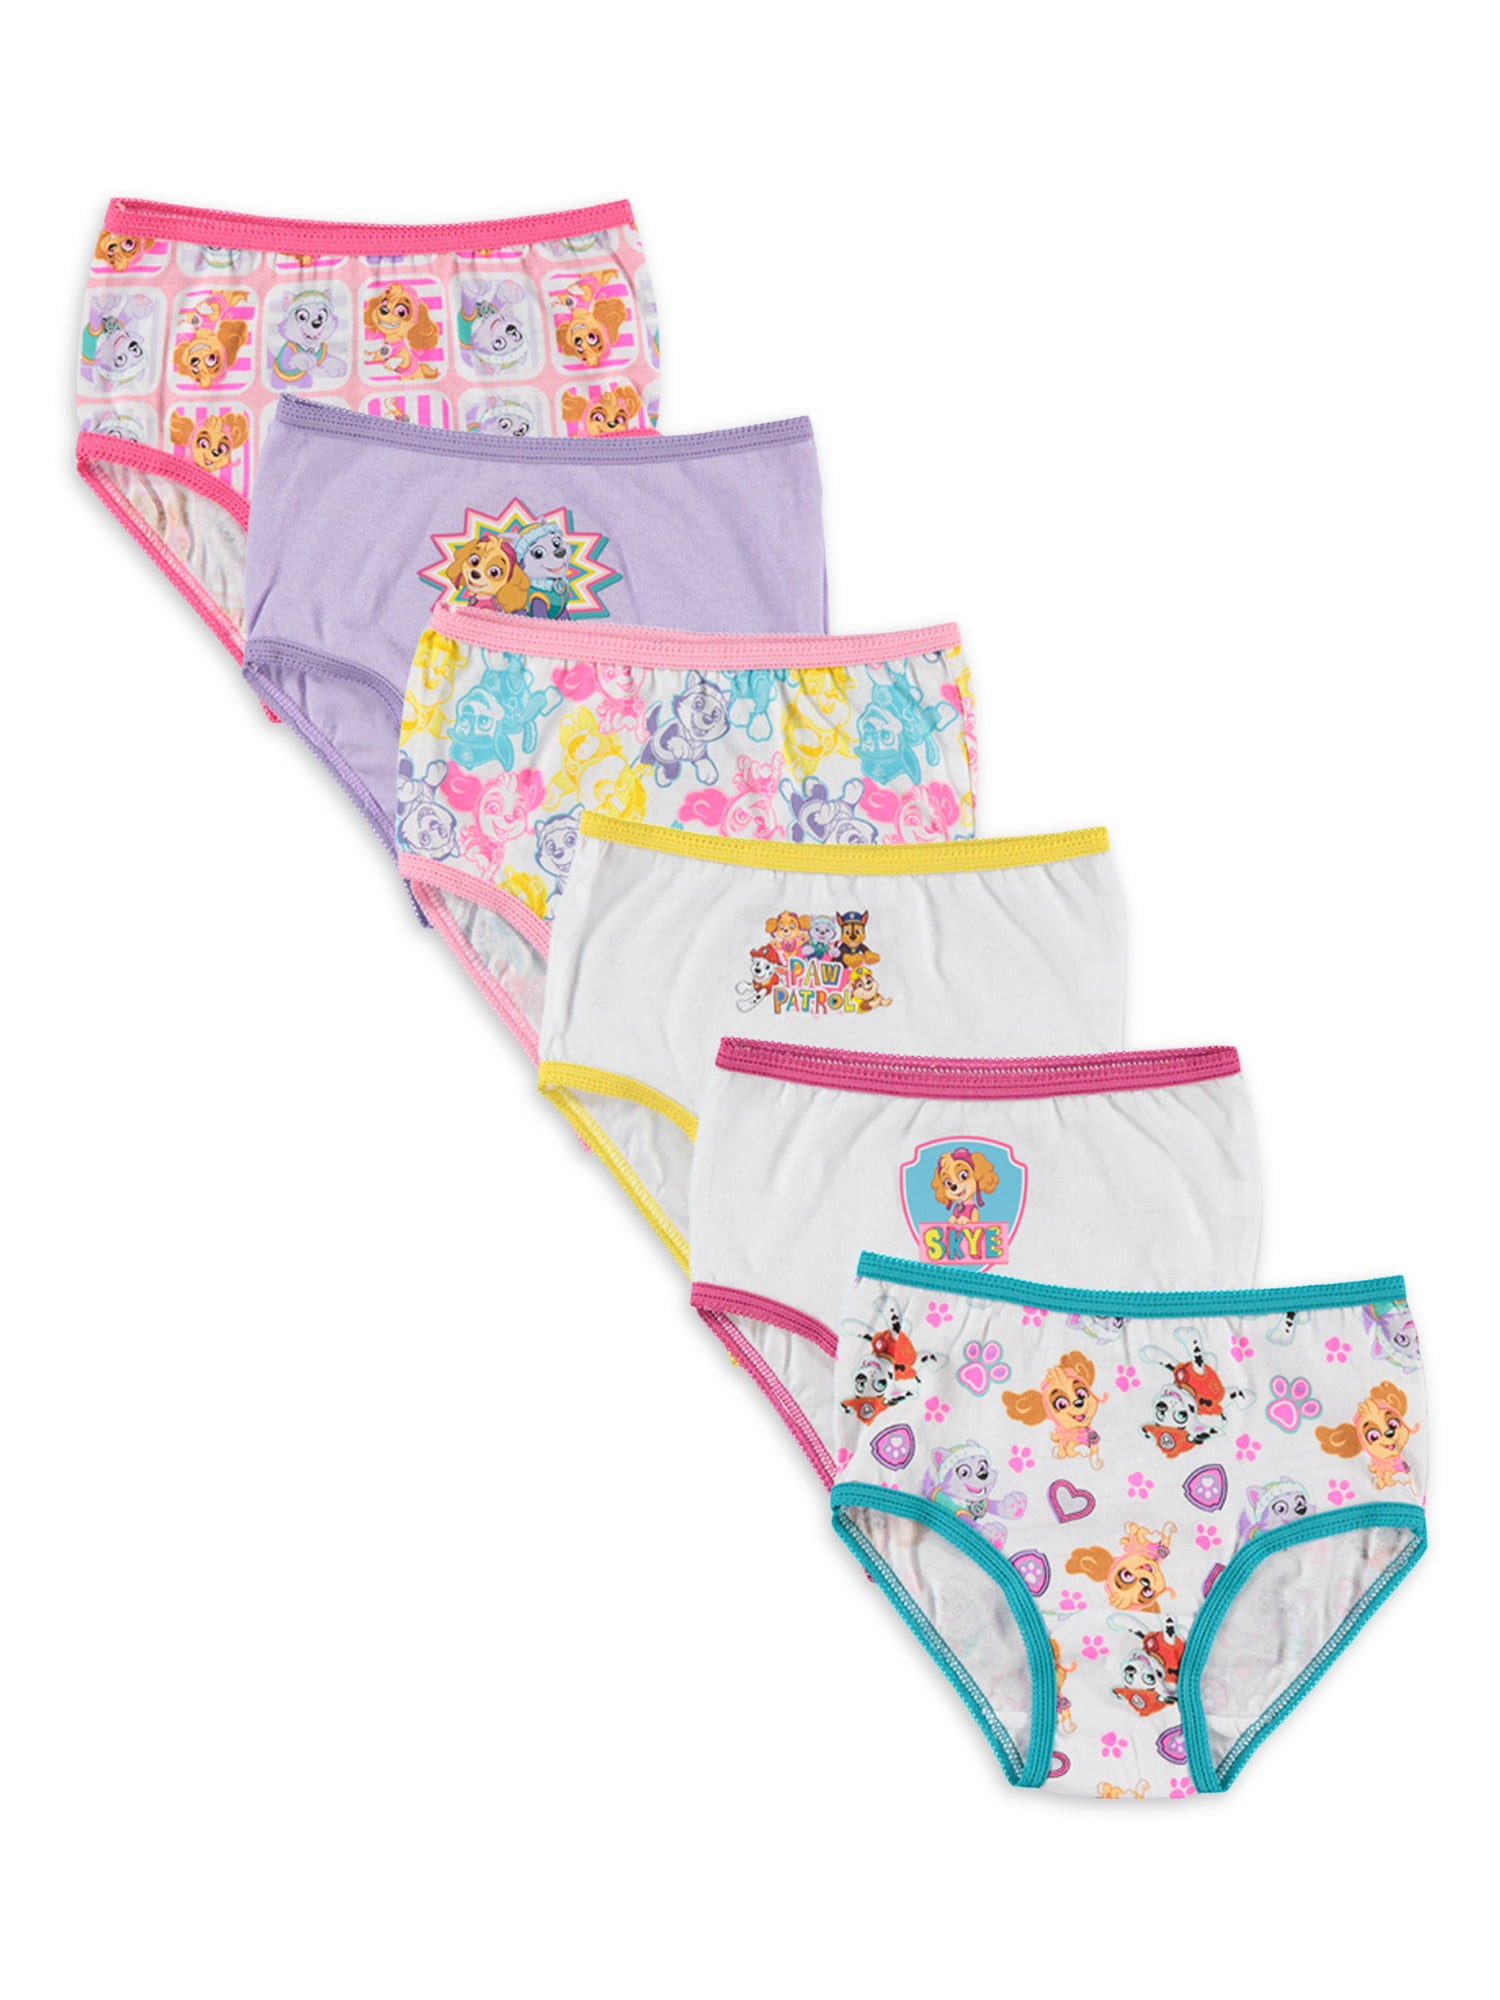 Paw Patrol Toddler Boys' Underwear, 6 Pack Sizes 2T-4T